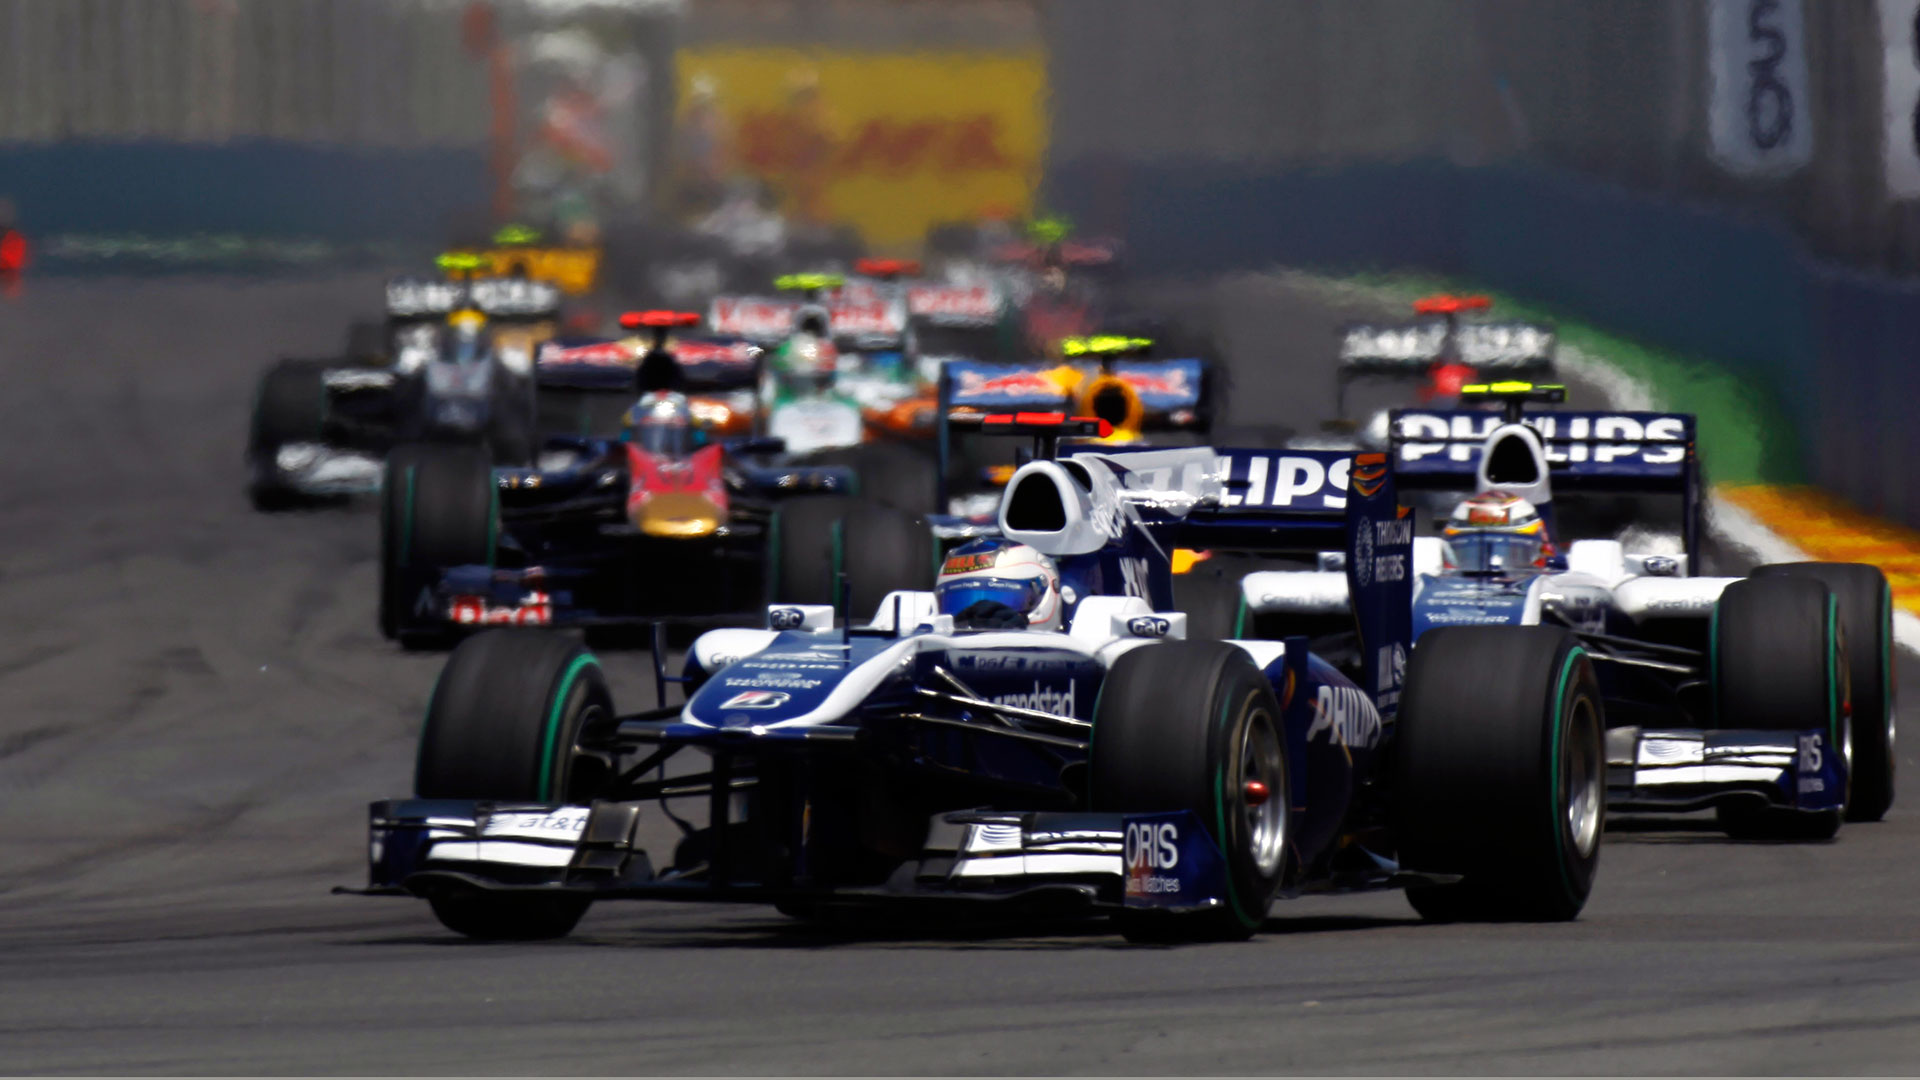 HD Wallpaper Formula Grand Prix Of Europe F1 Fansite